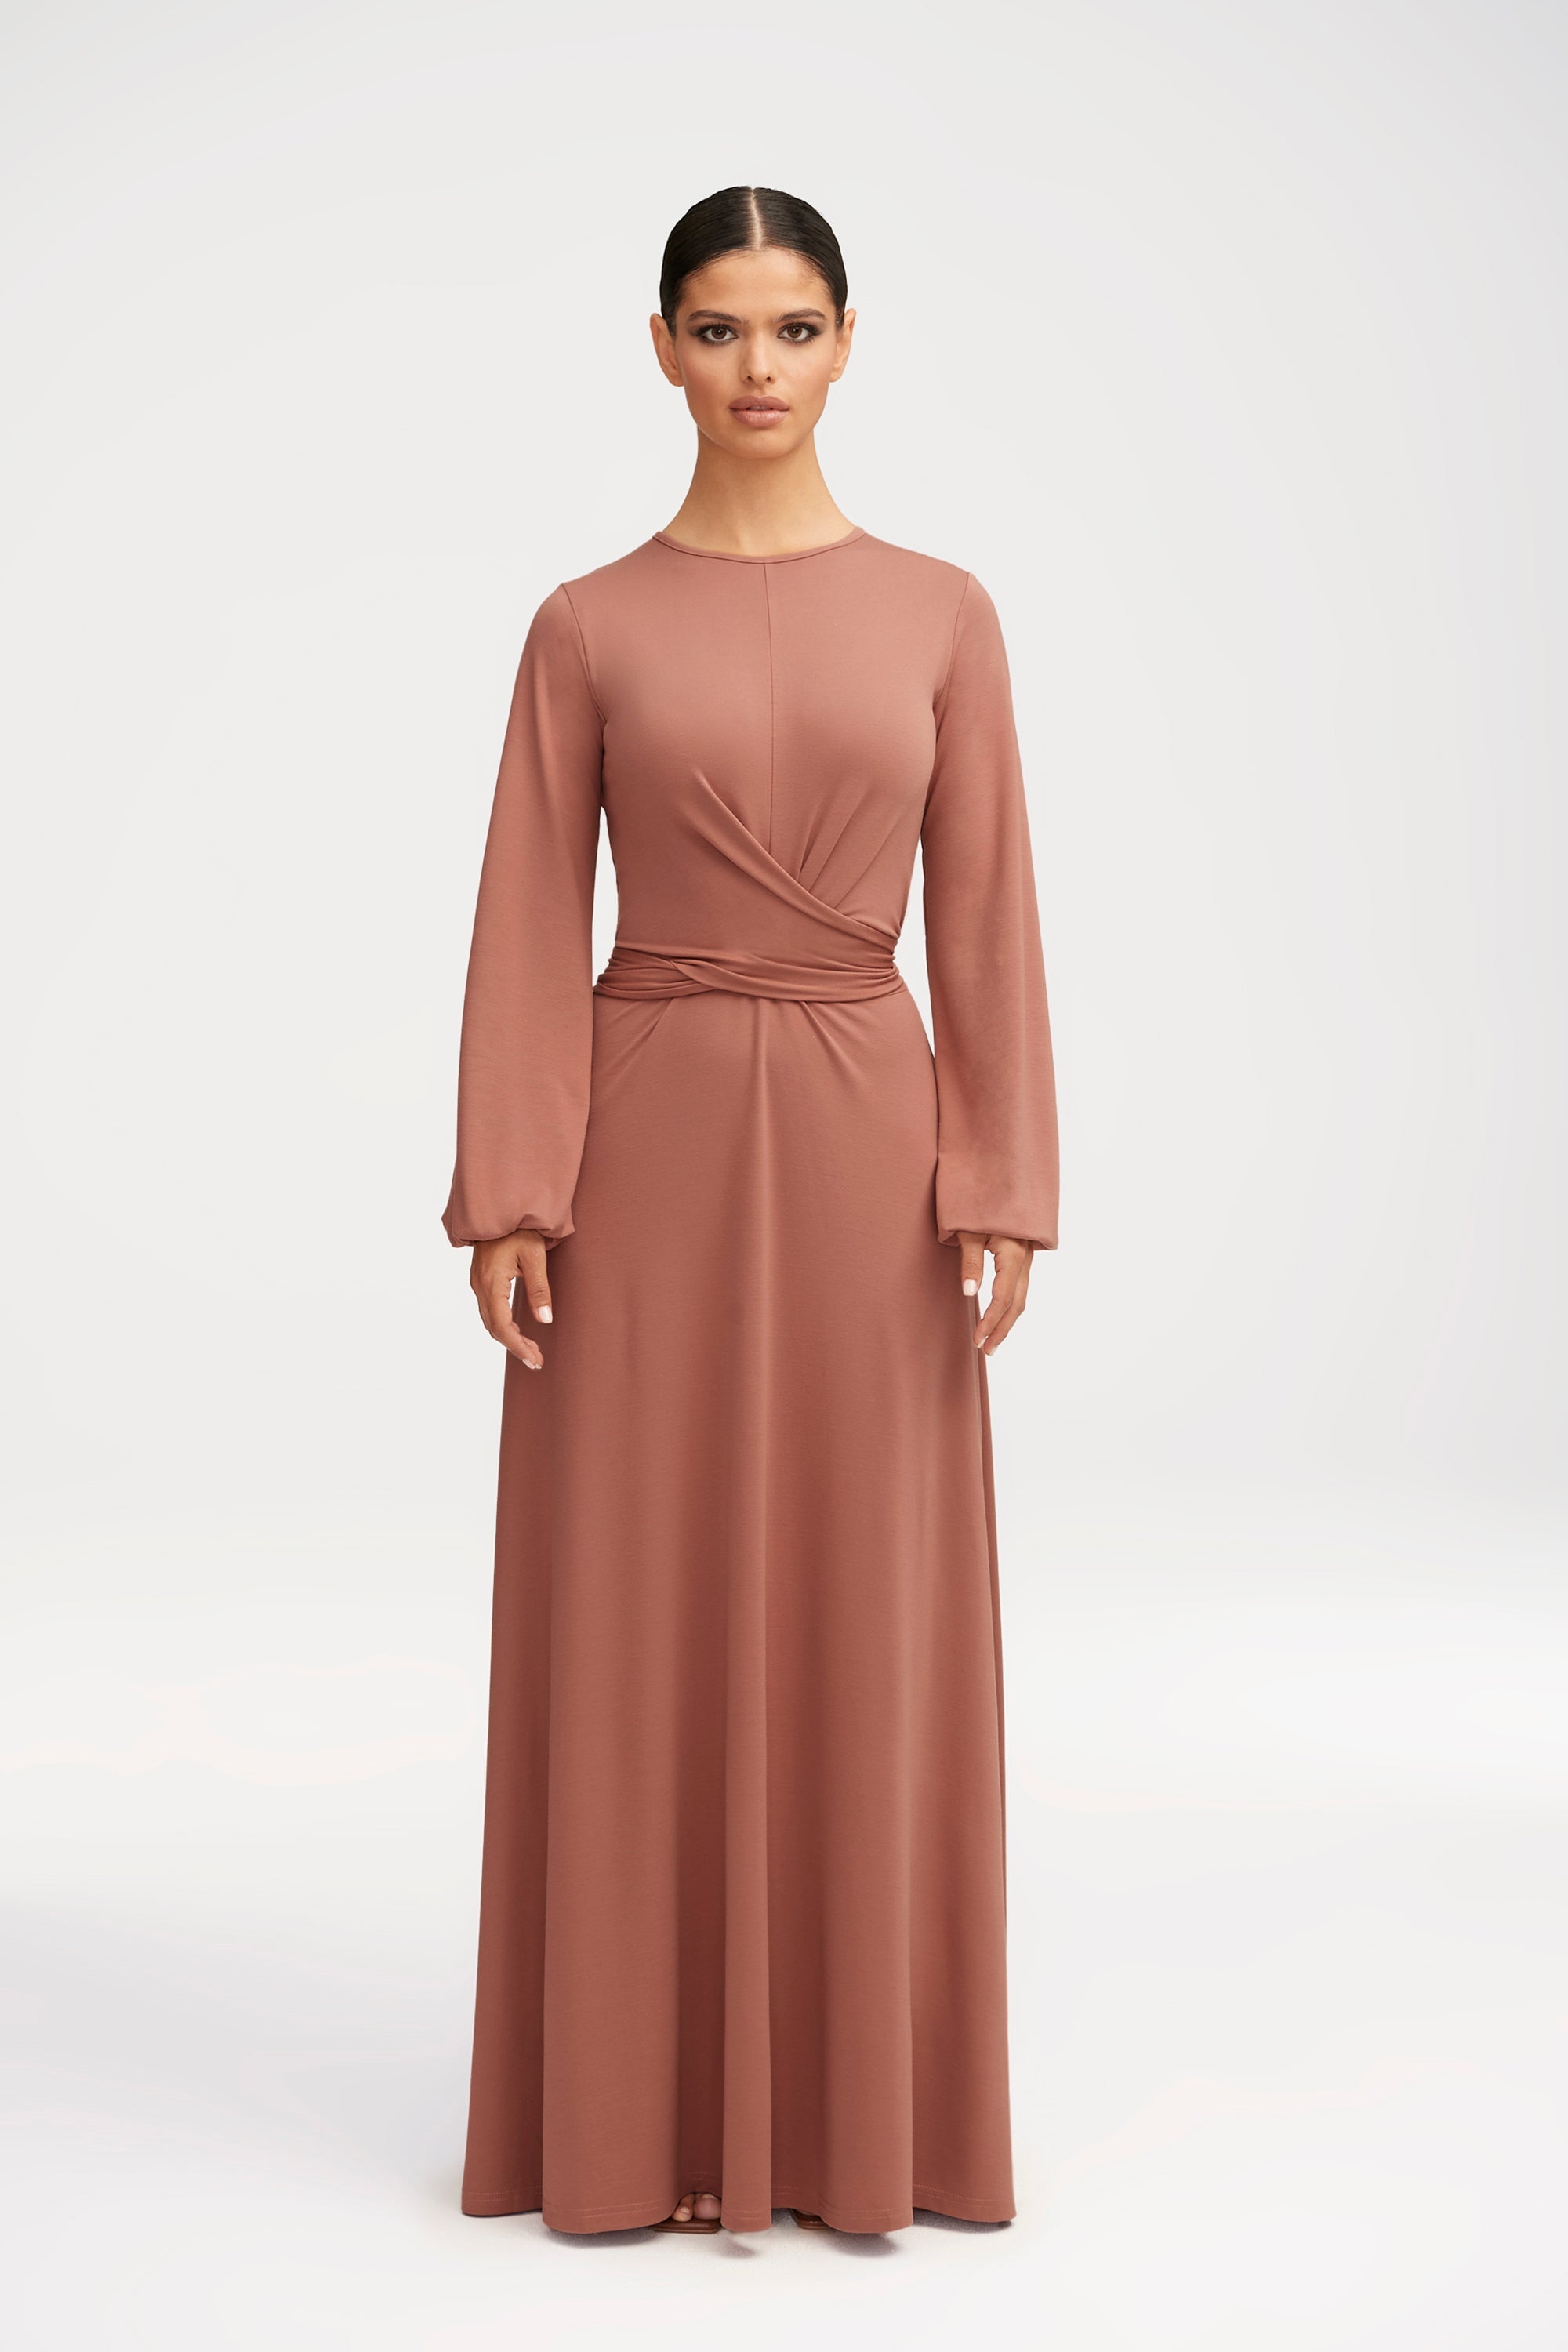 XIEXIEBUY Long Womens Under Dress Dress Islamic Dress Sleeve Solid